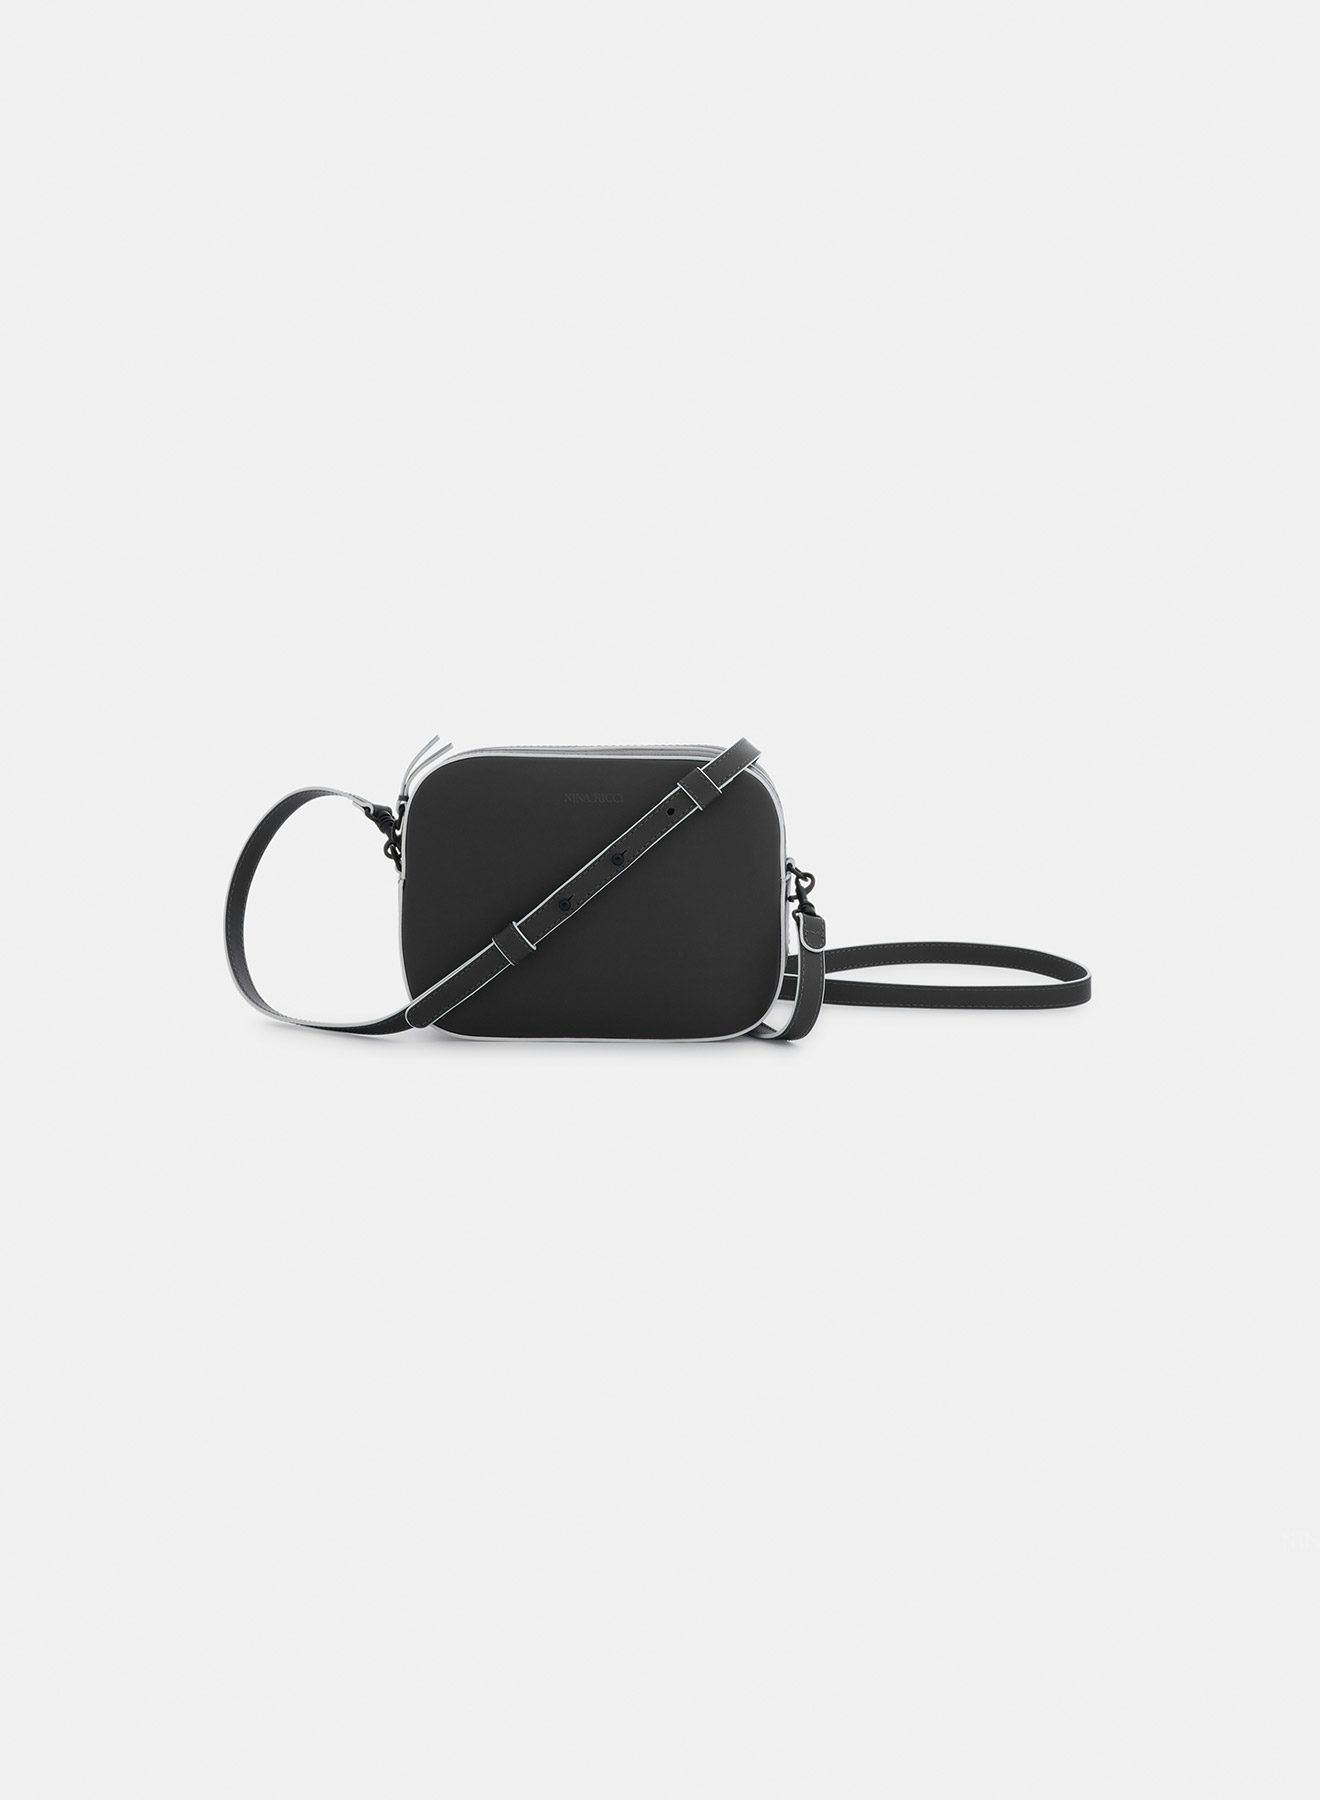 Leather camera bag black - Nina Ricci